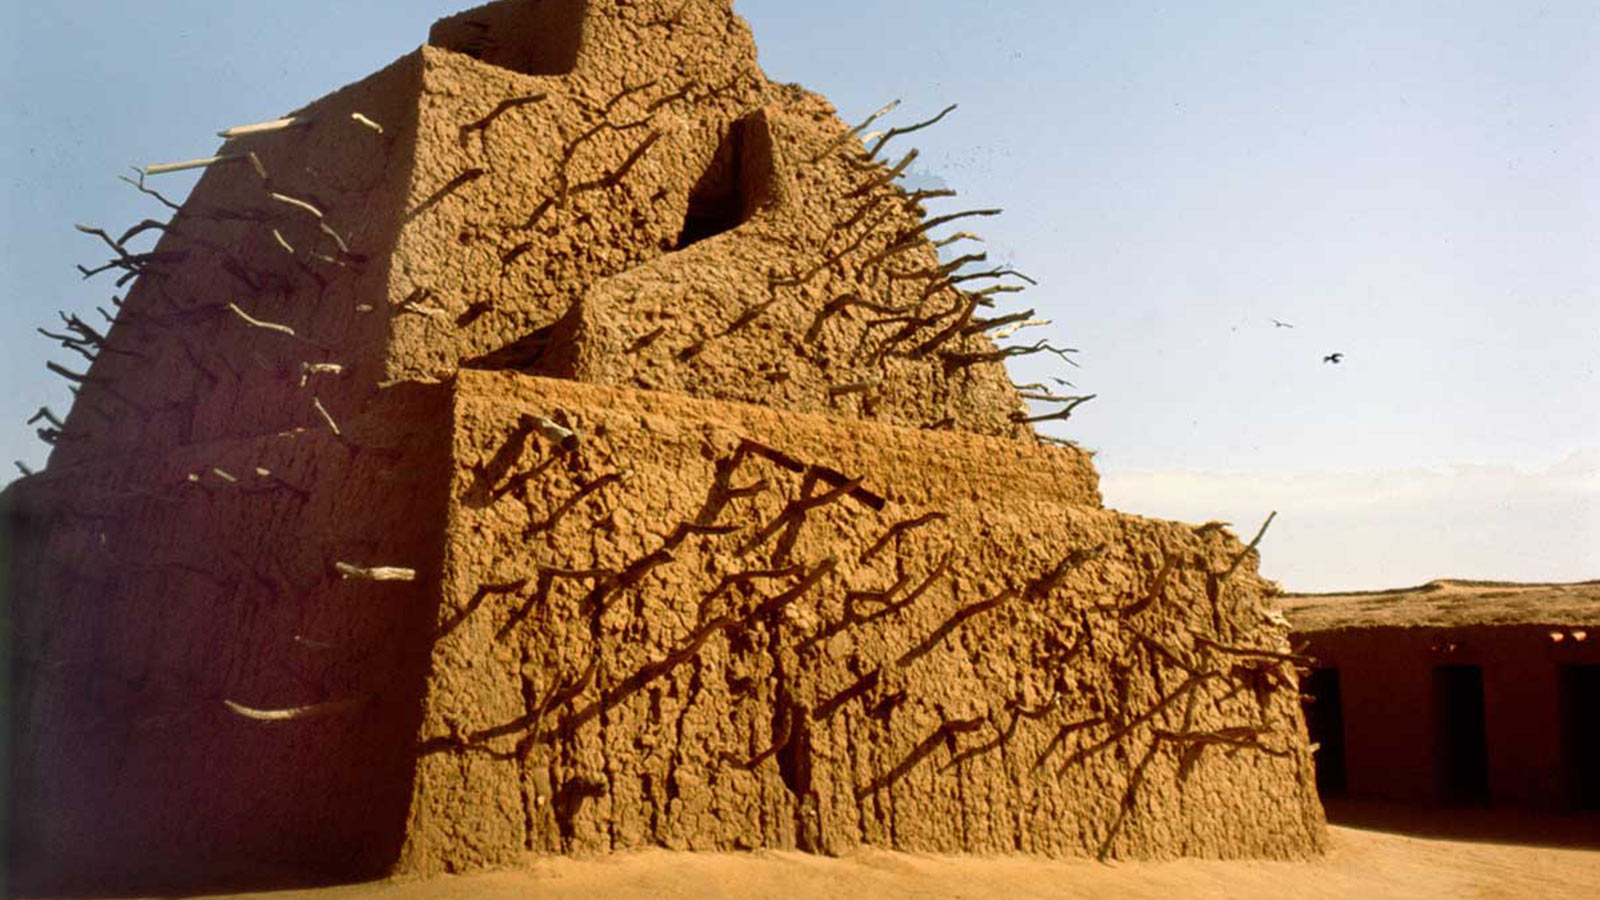 The tomb of Emperor Askia Toure at Gao, Mali